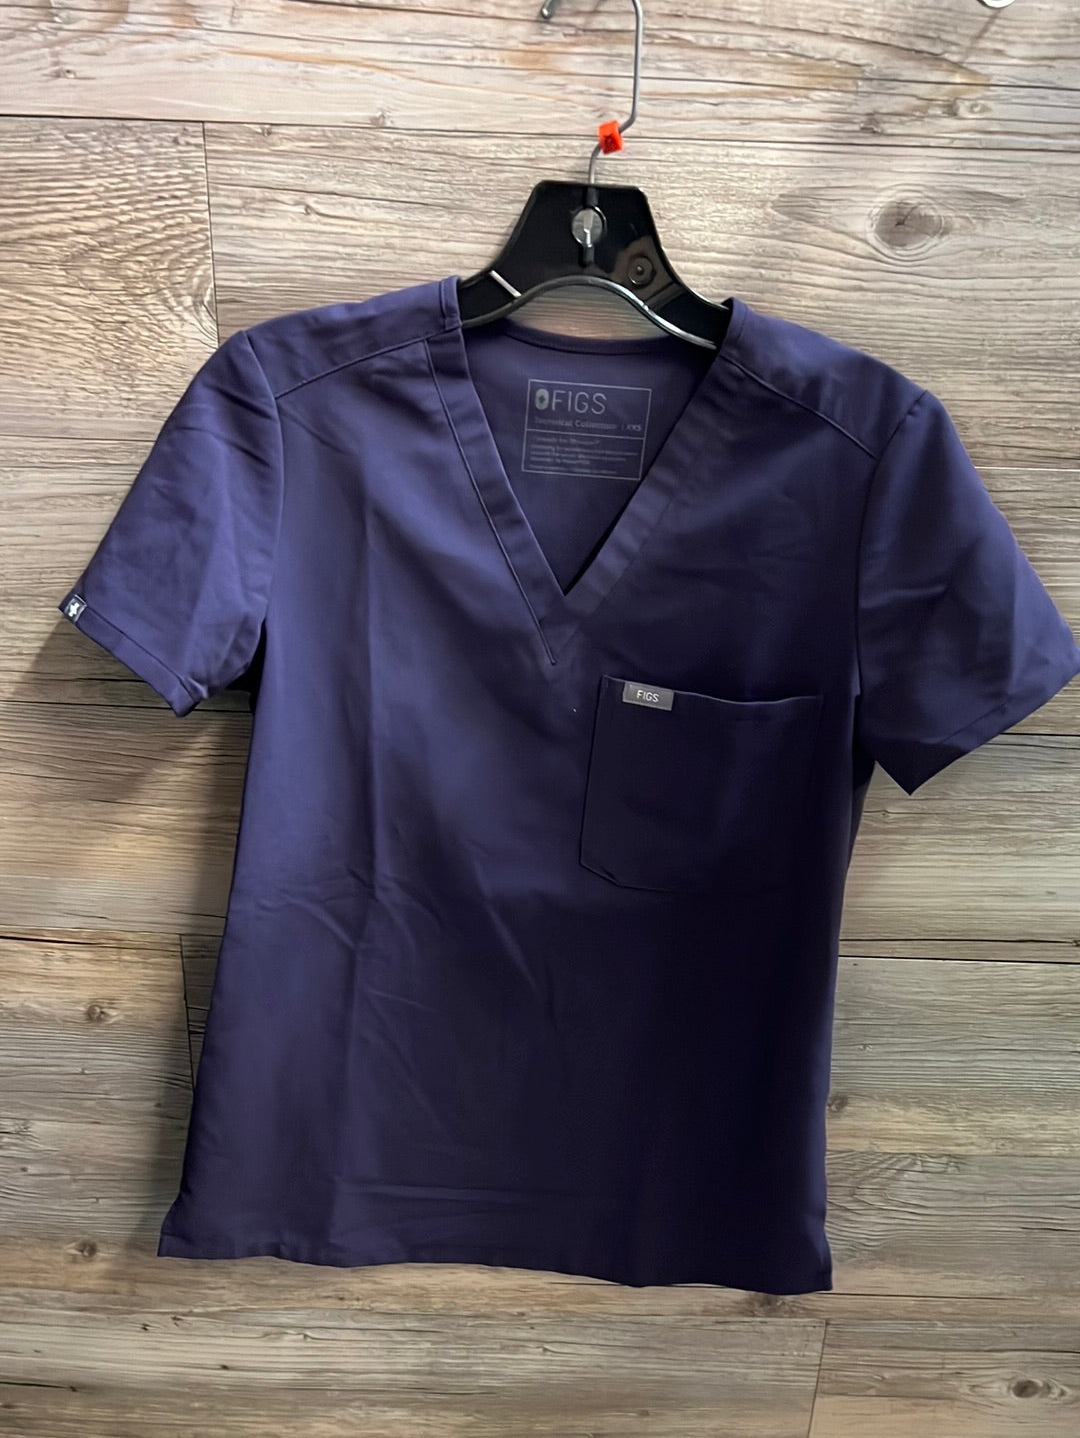 Figs Technical Collection Shirt Purple, Size XXS